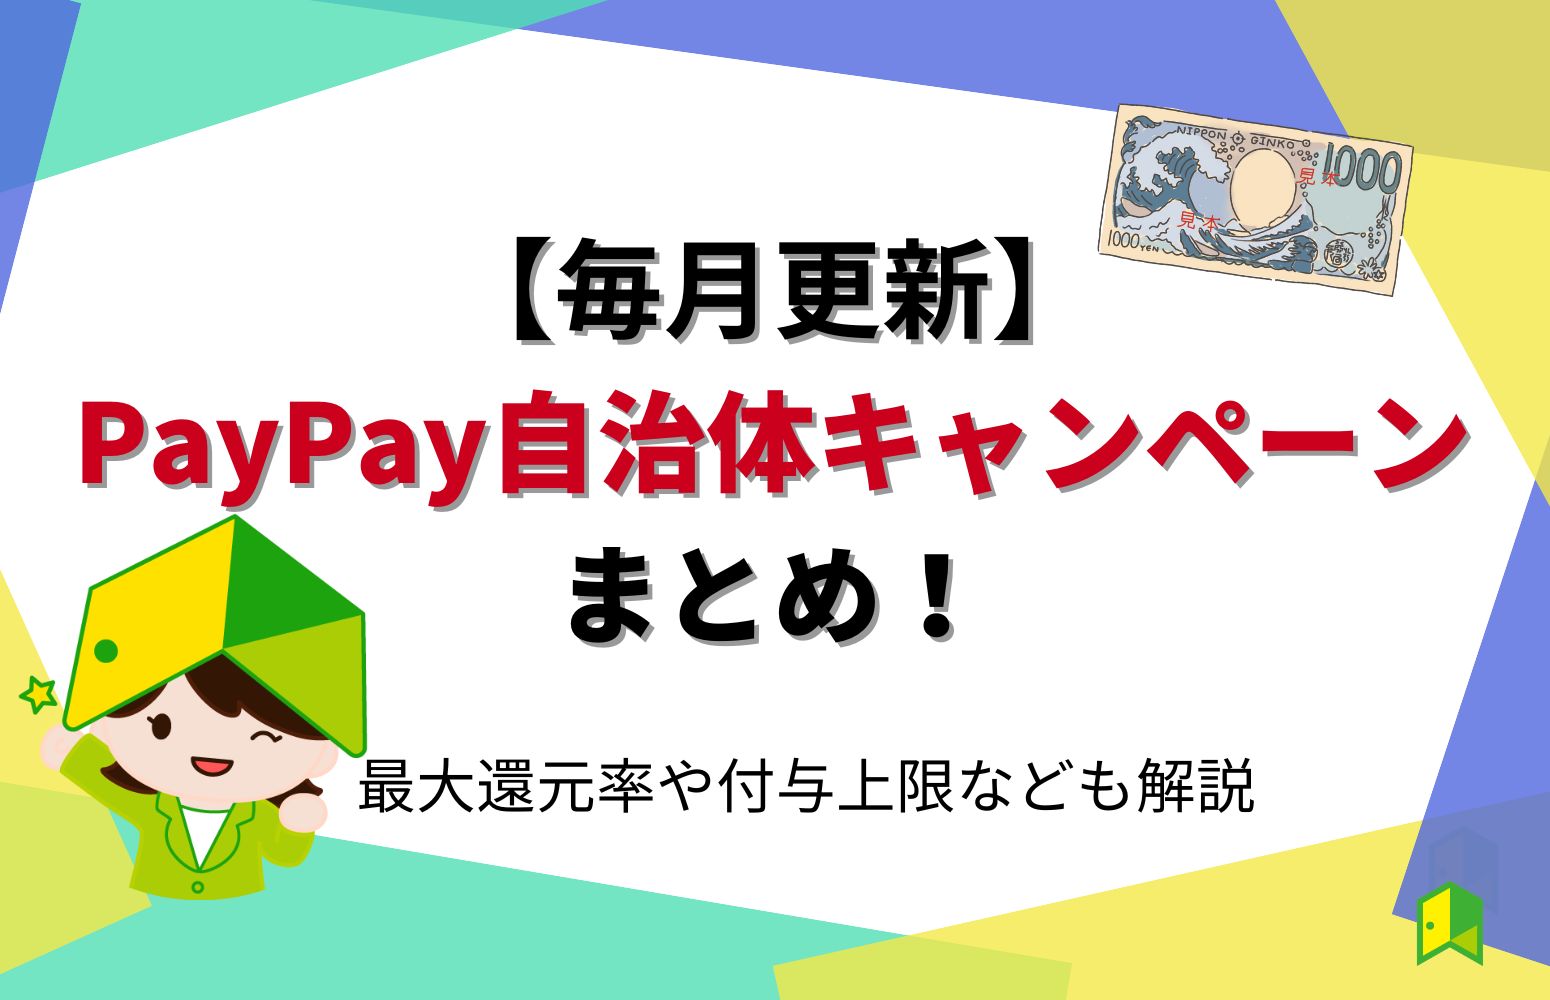 PayPay自治体キャンペーンまとめアイキャッチ画像